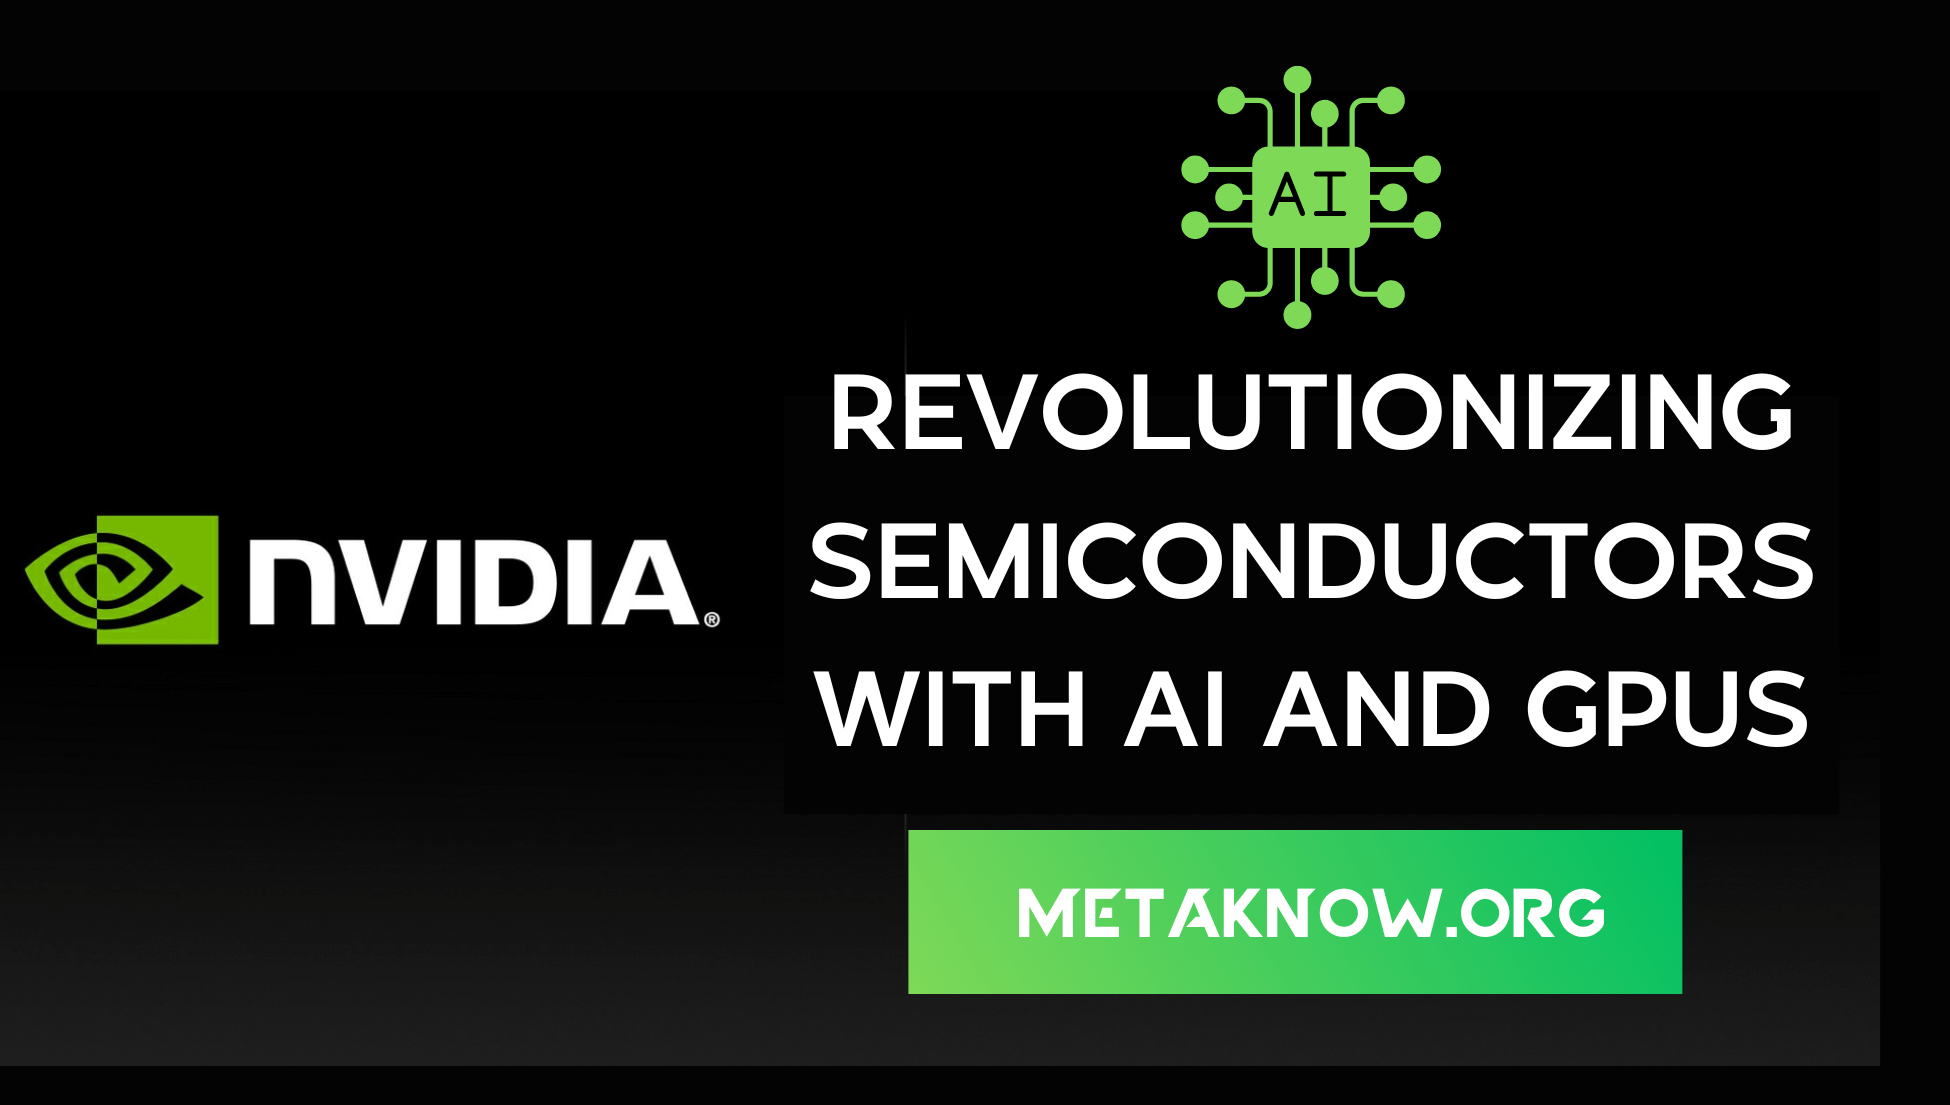 Nvidia: Revolutionizing Semiconductors with AI and GPUs